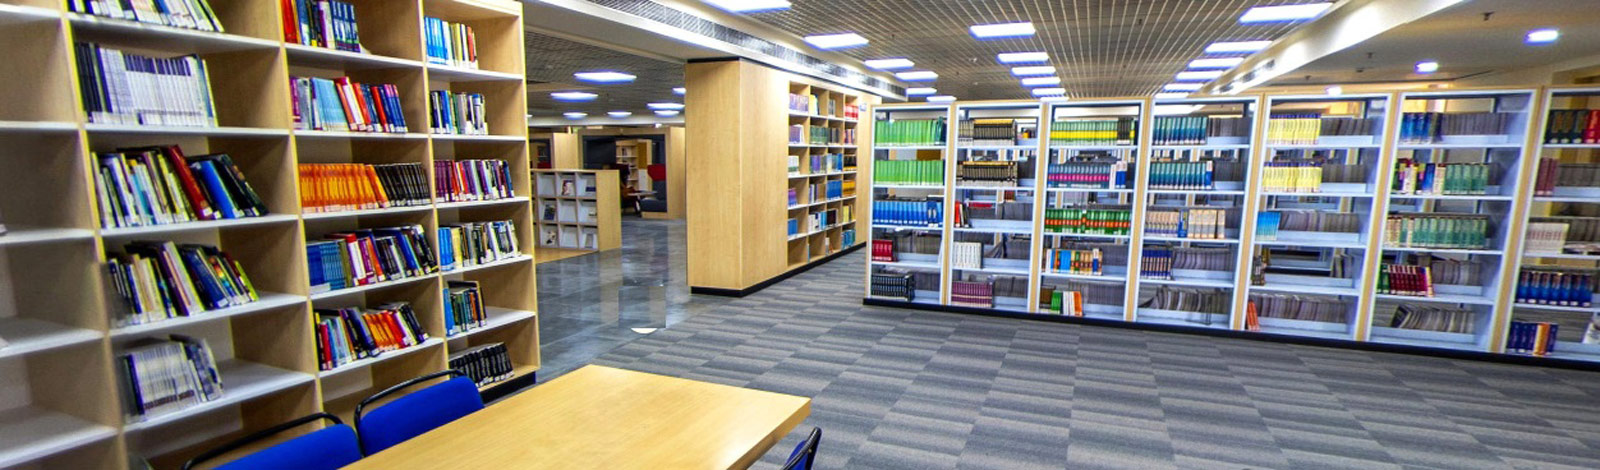 books library gurgaon